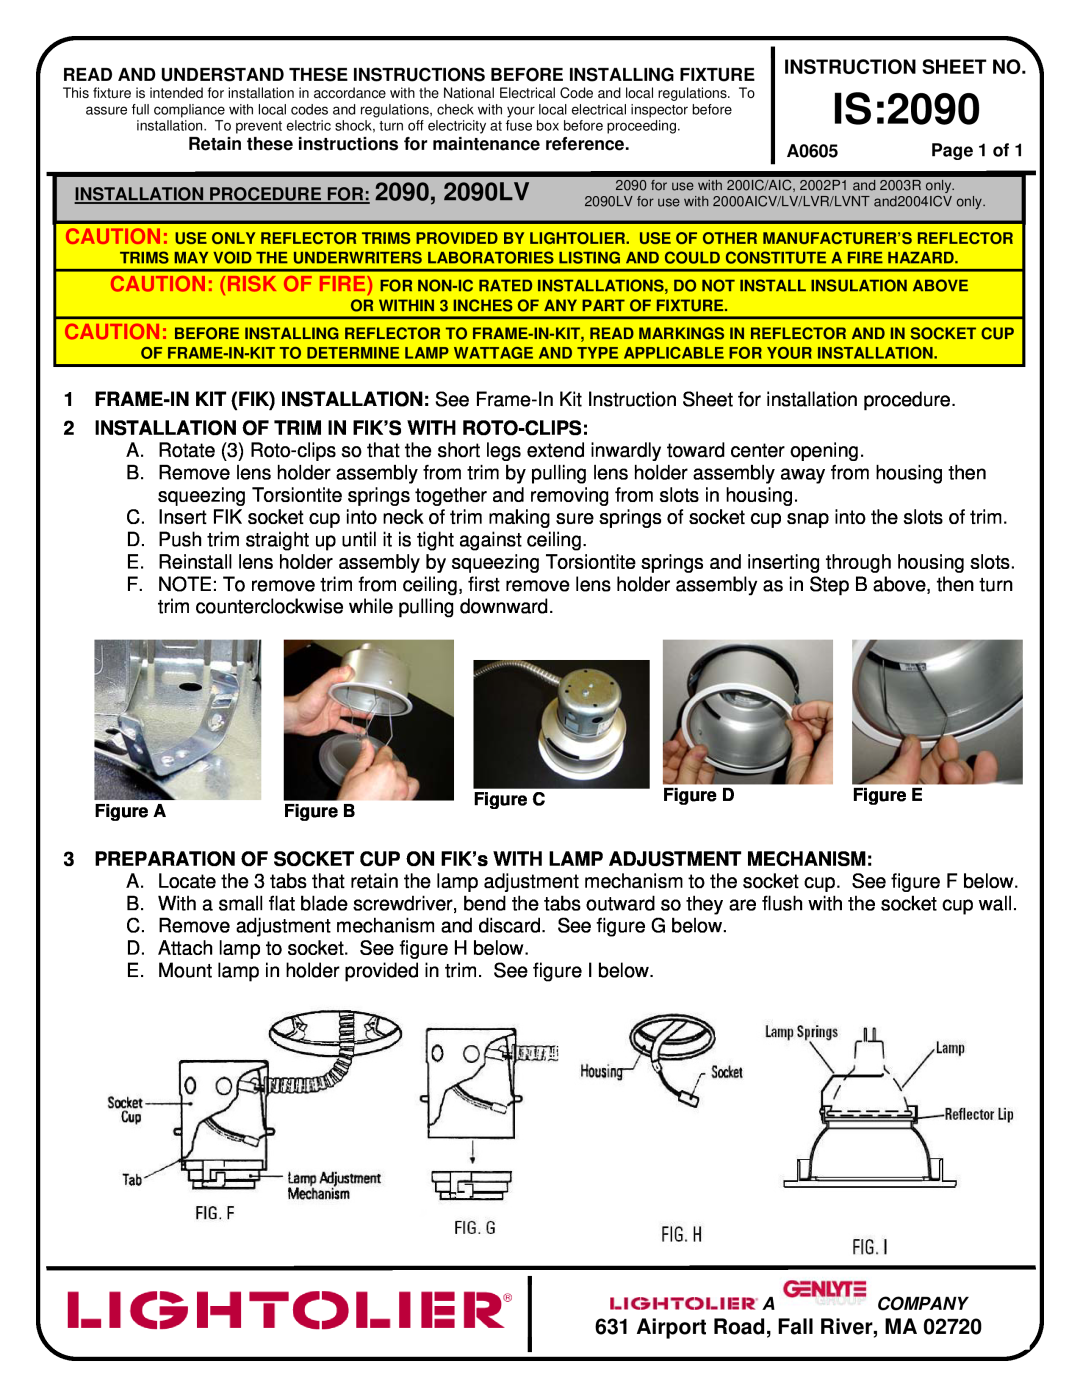 Lightolier 0790 instruction sheet Is, Airport Road, Fall River, MA, Instruction Sheet No 